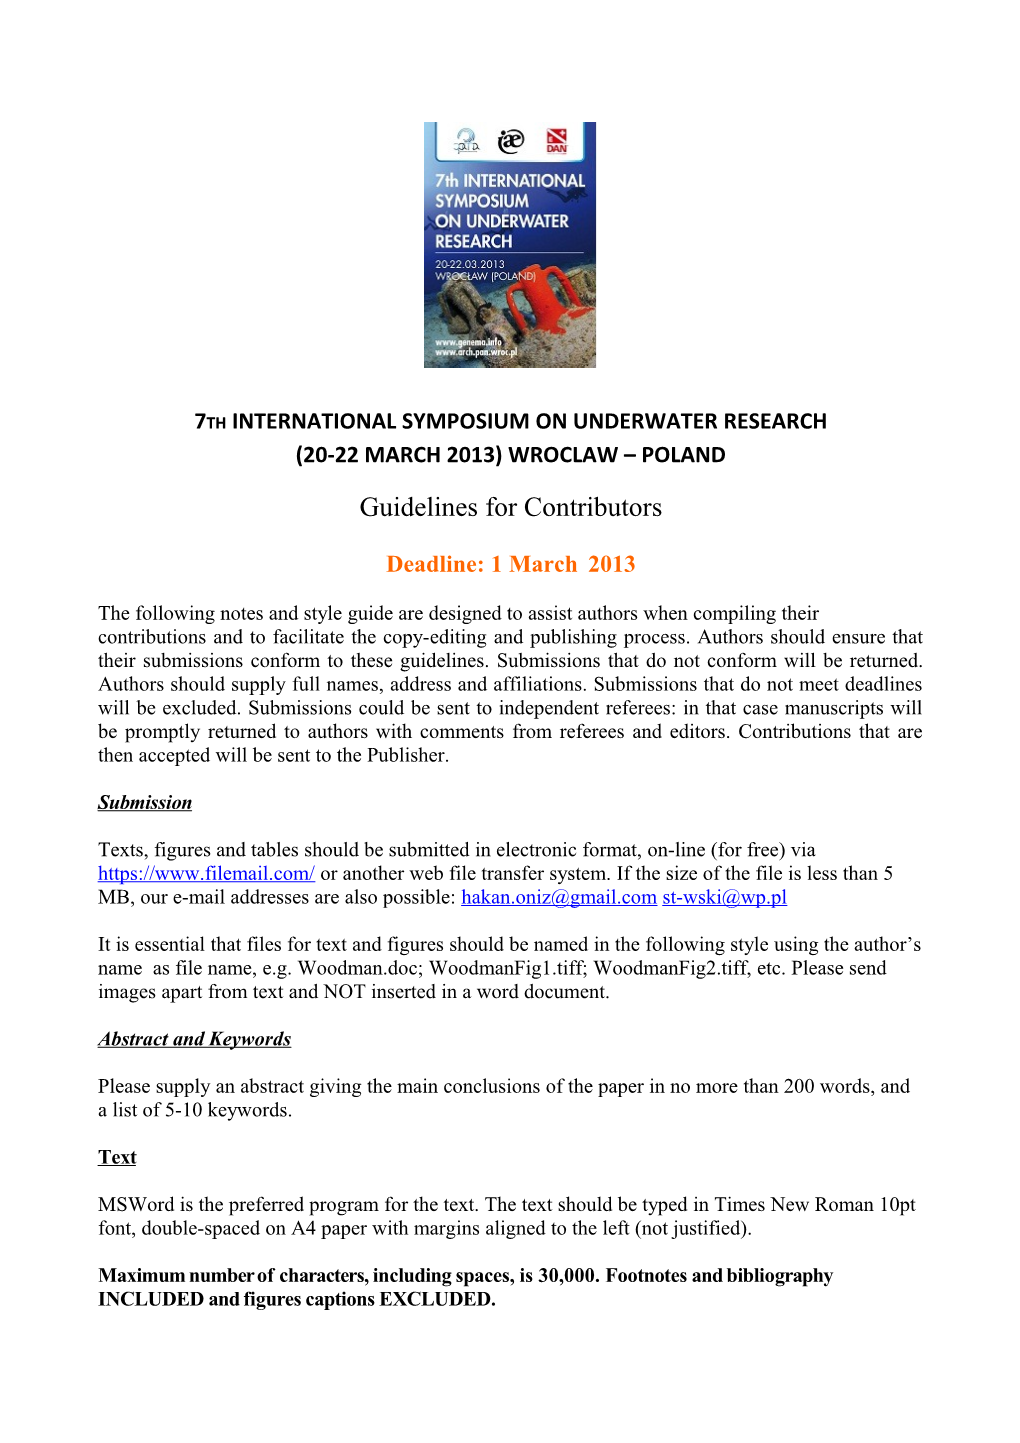 7Th INTERNATIONAL SYMPOSIUM on UNDERWATER RESEARCH (20-22 MARCH 2013) WROCLAW POLAND